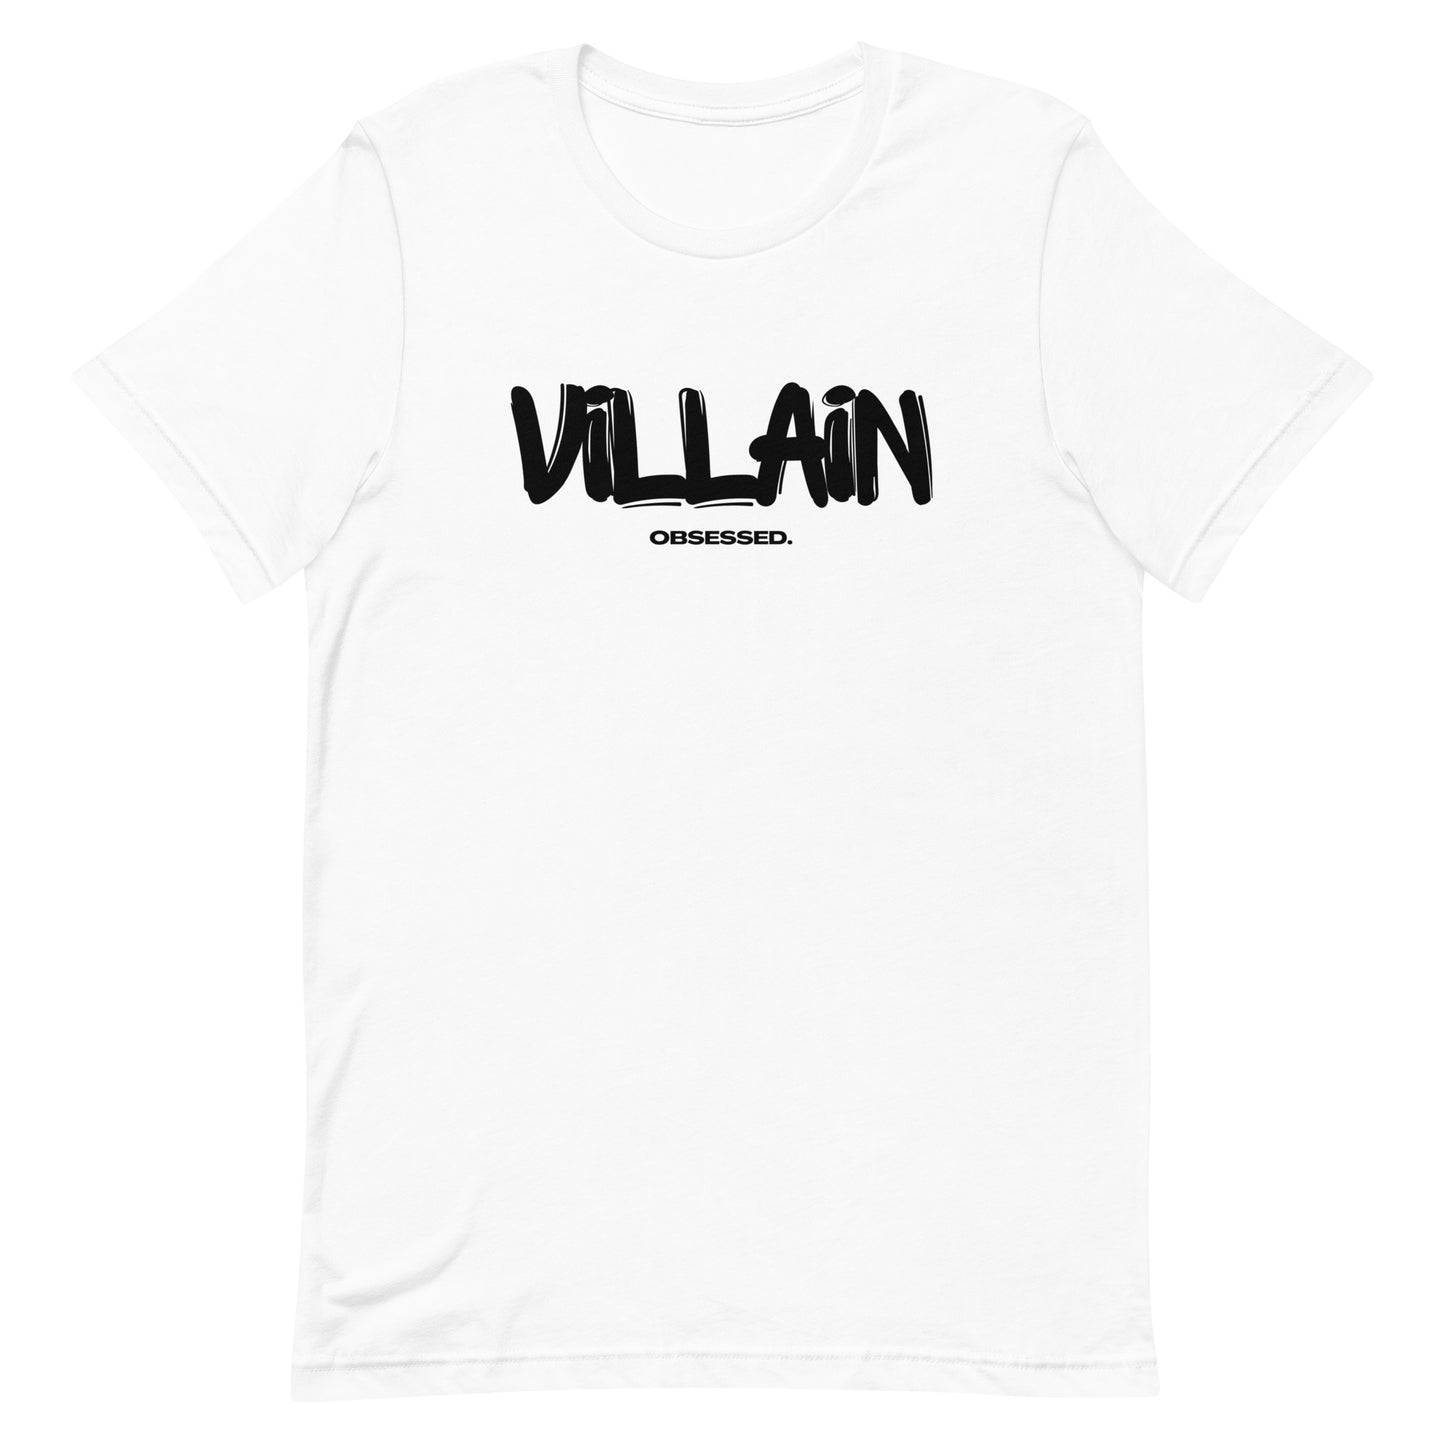 villain obsessed t-shirt